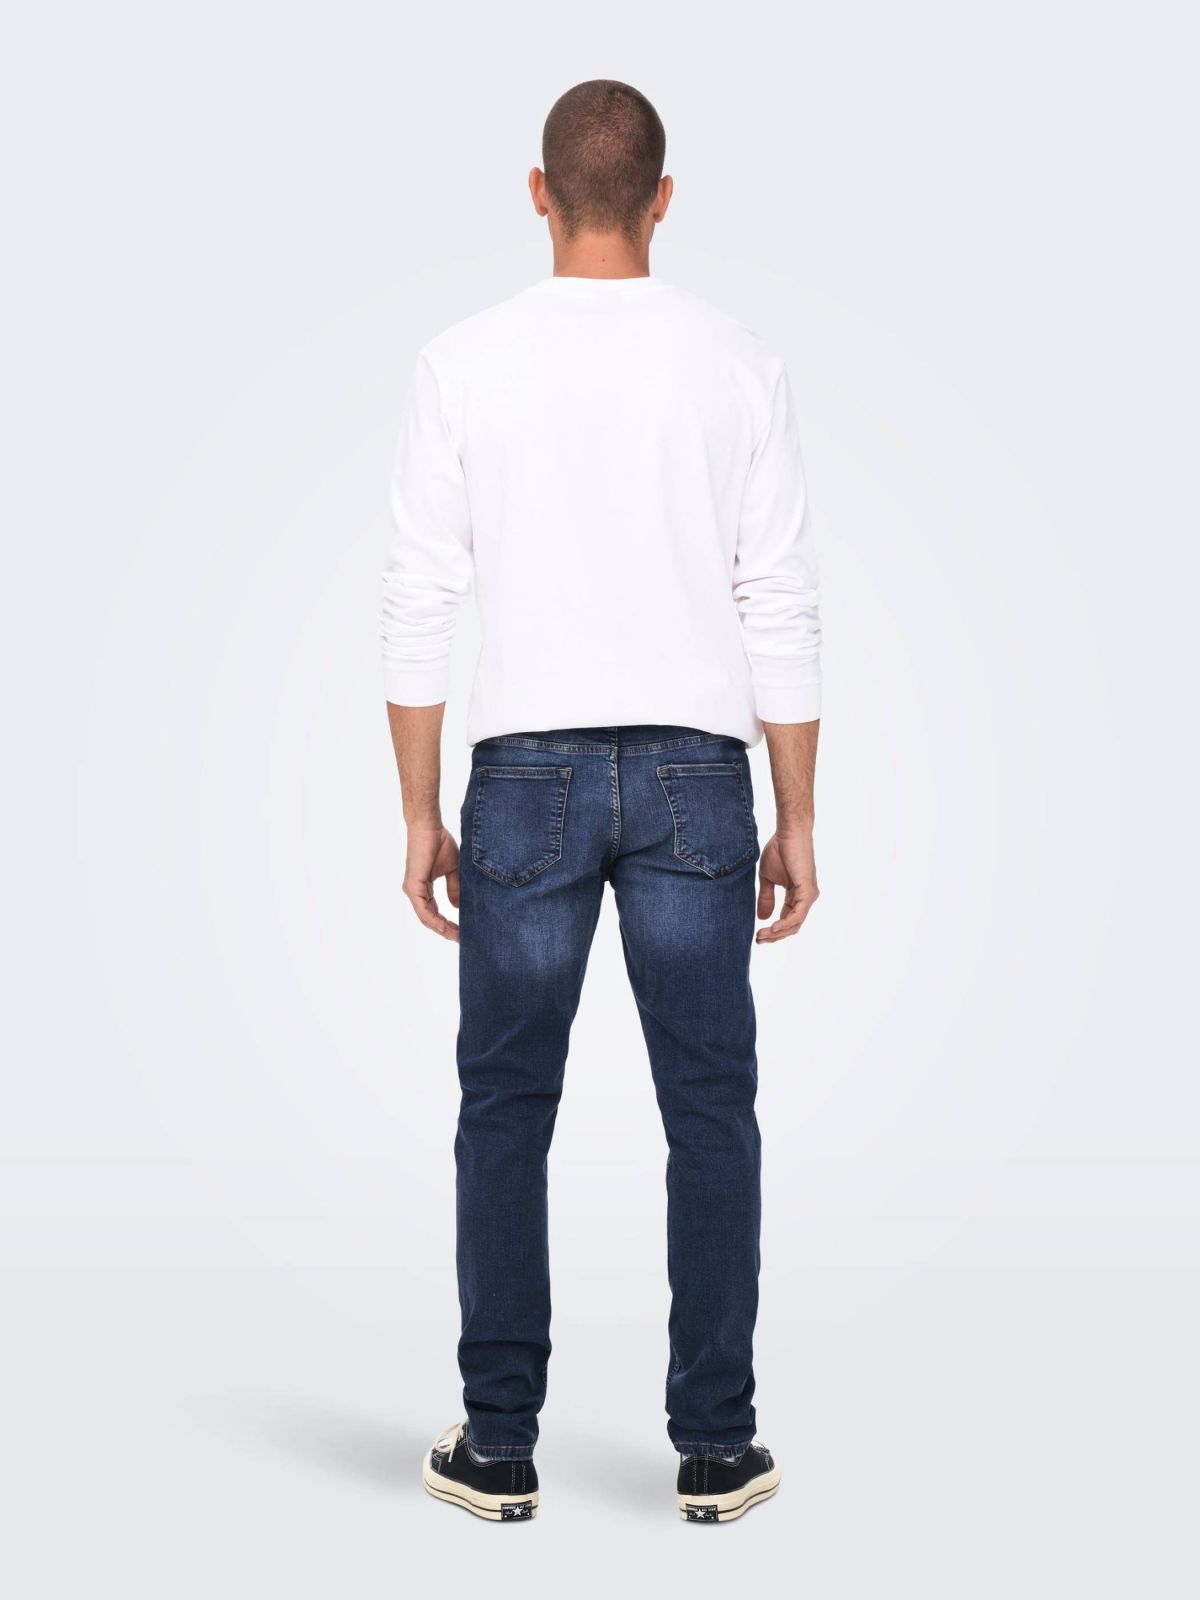  ג'ינס עם עיטורי הבהרות Slim Fit של ONLY & SONS